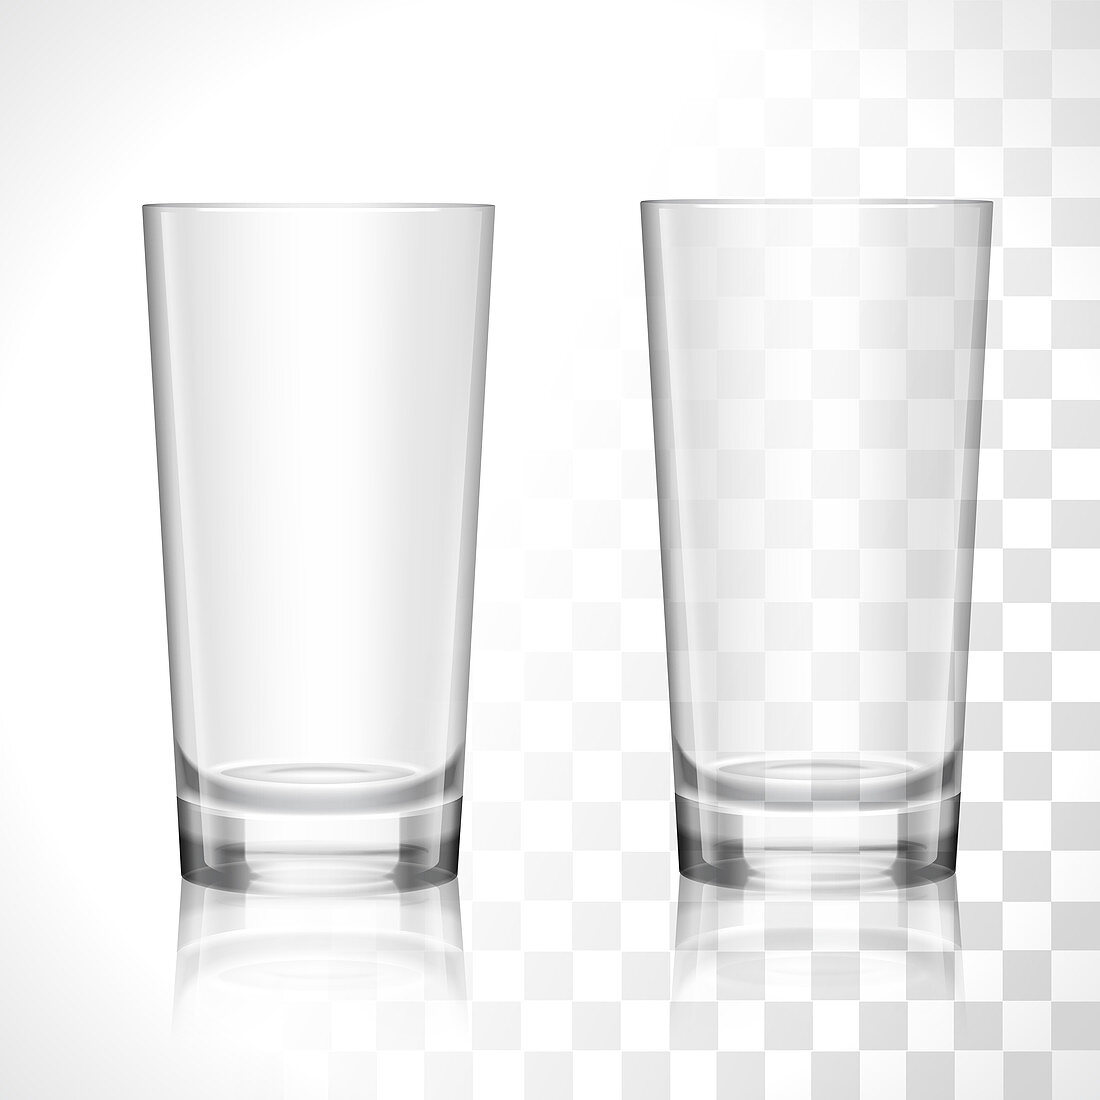 Empty glasses, illustration